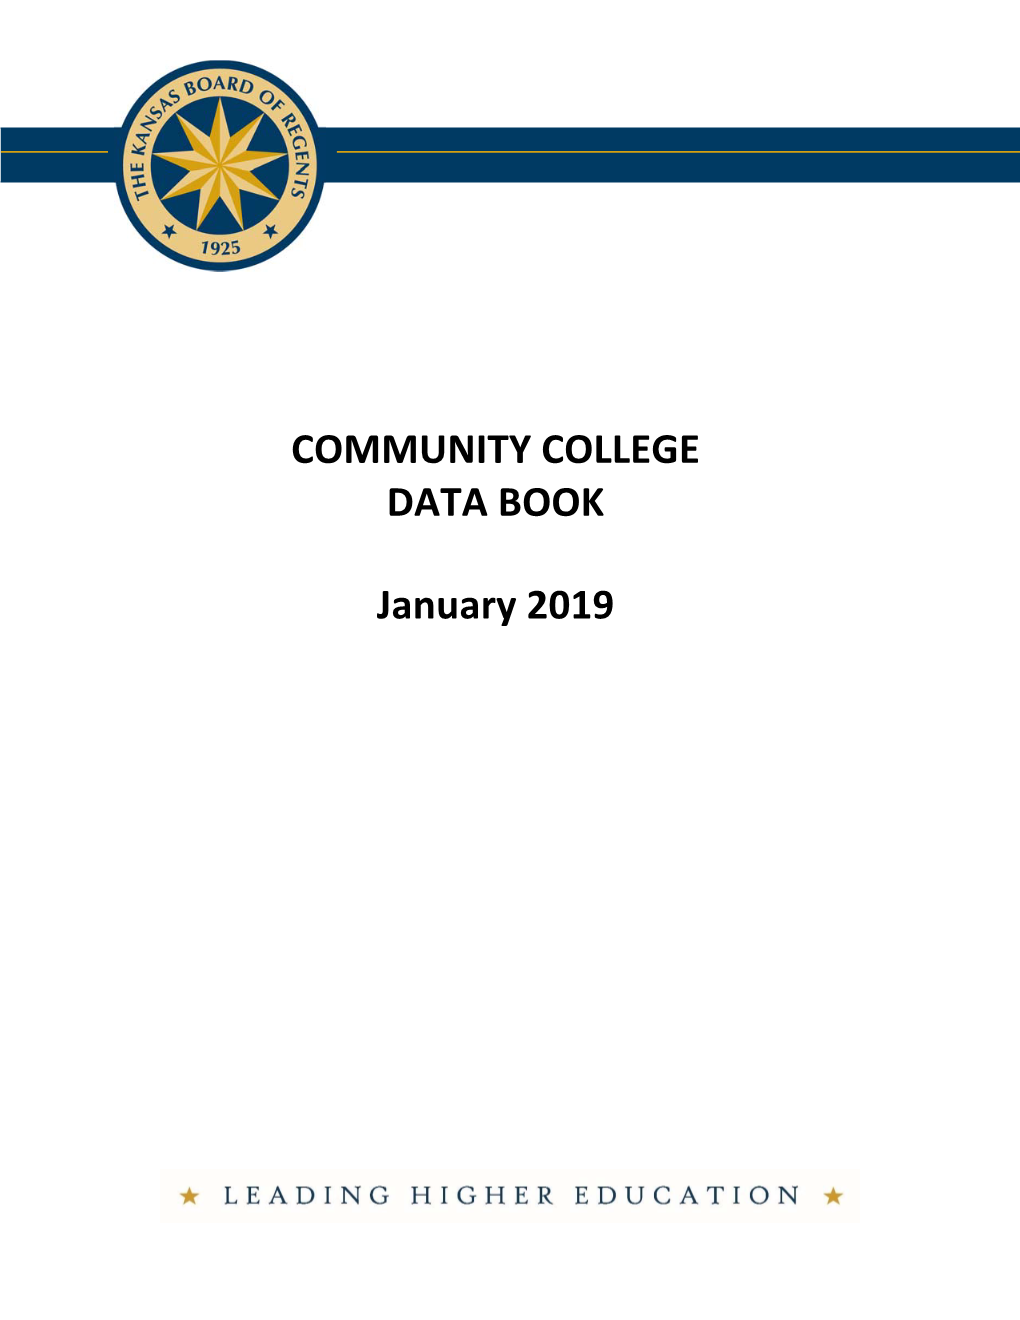 2019 Community College Data Book